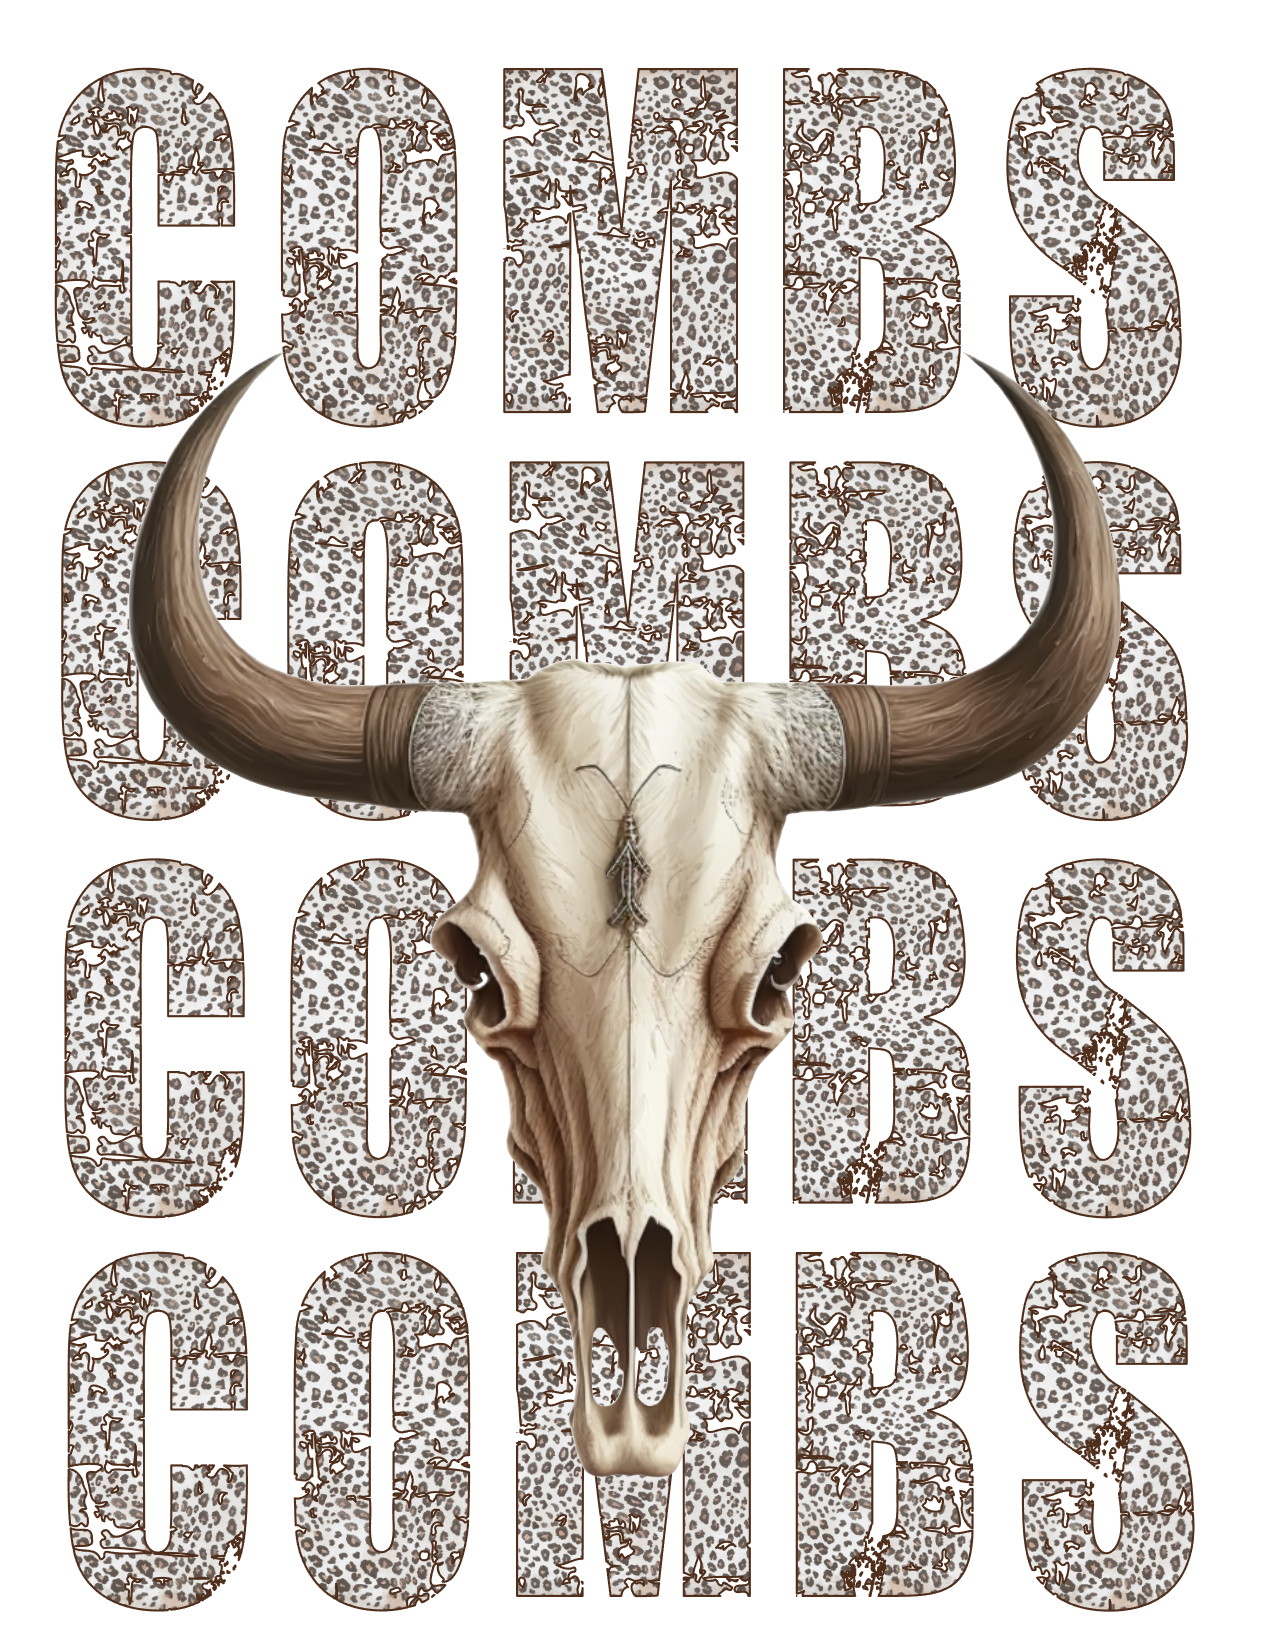 #36 COMBS COMBS COMBS COMBS (leopard)